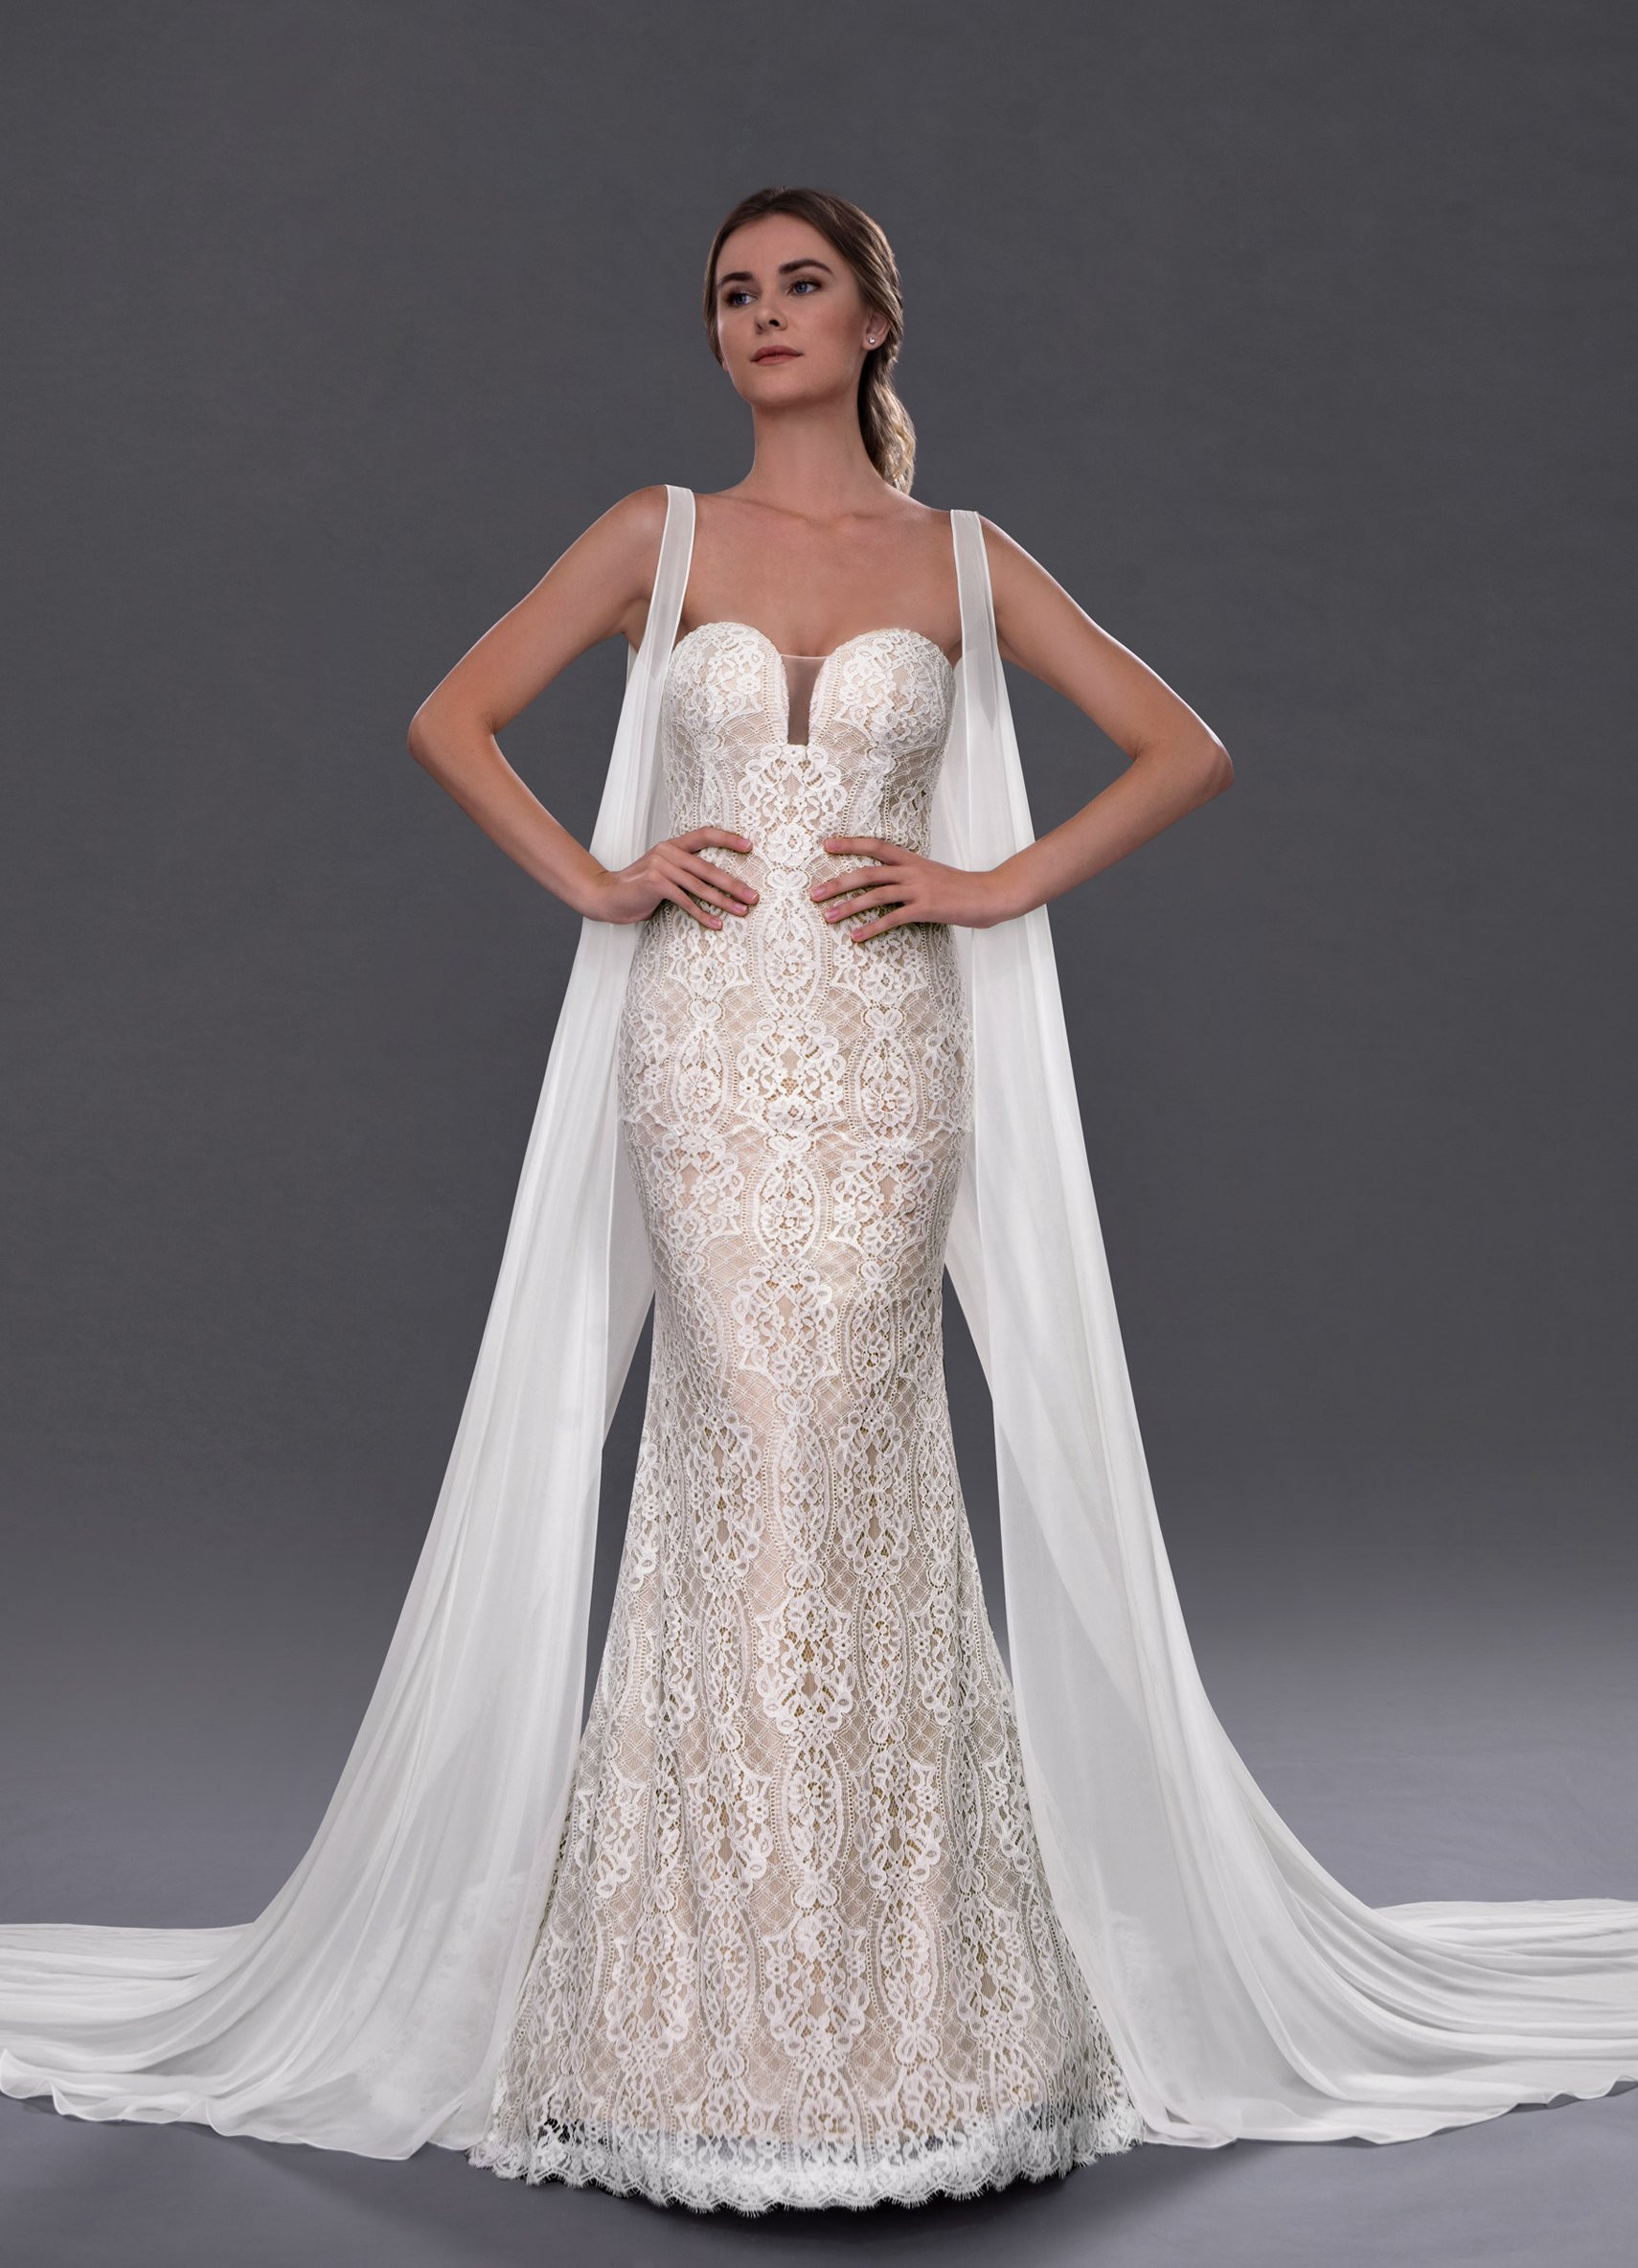 Bridal Looks 2020
 2020 Wedding Dress Trends From an Expert Bridal Designer